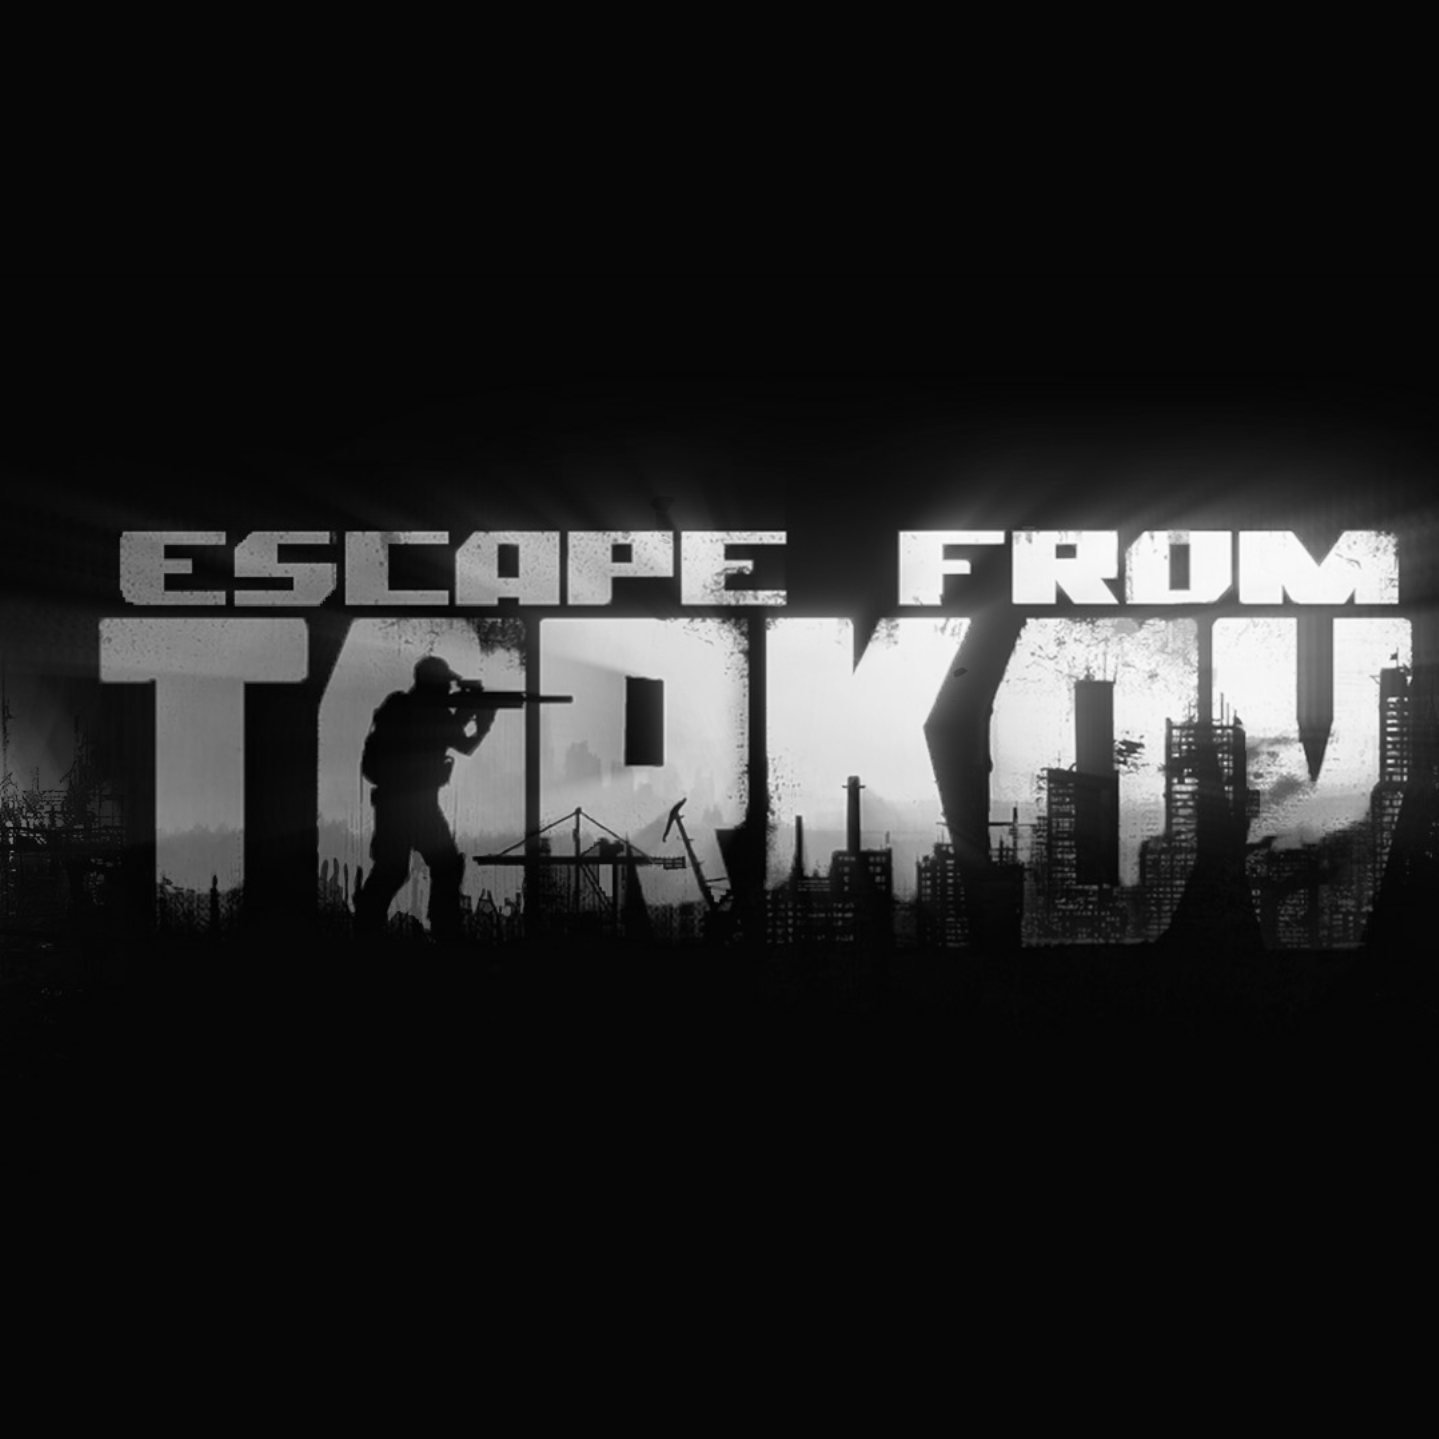 Battlestate Games Celebrates With Fantastic "Escape From Tarkov" Discount